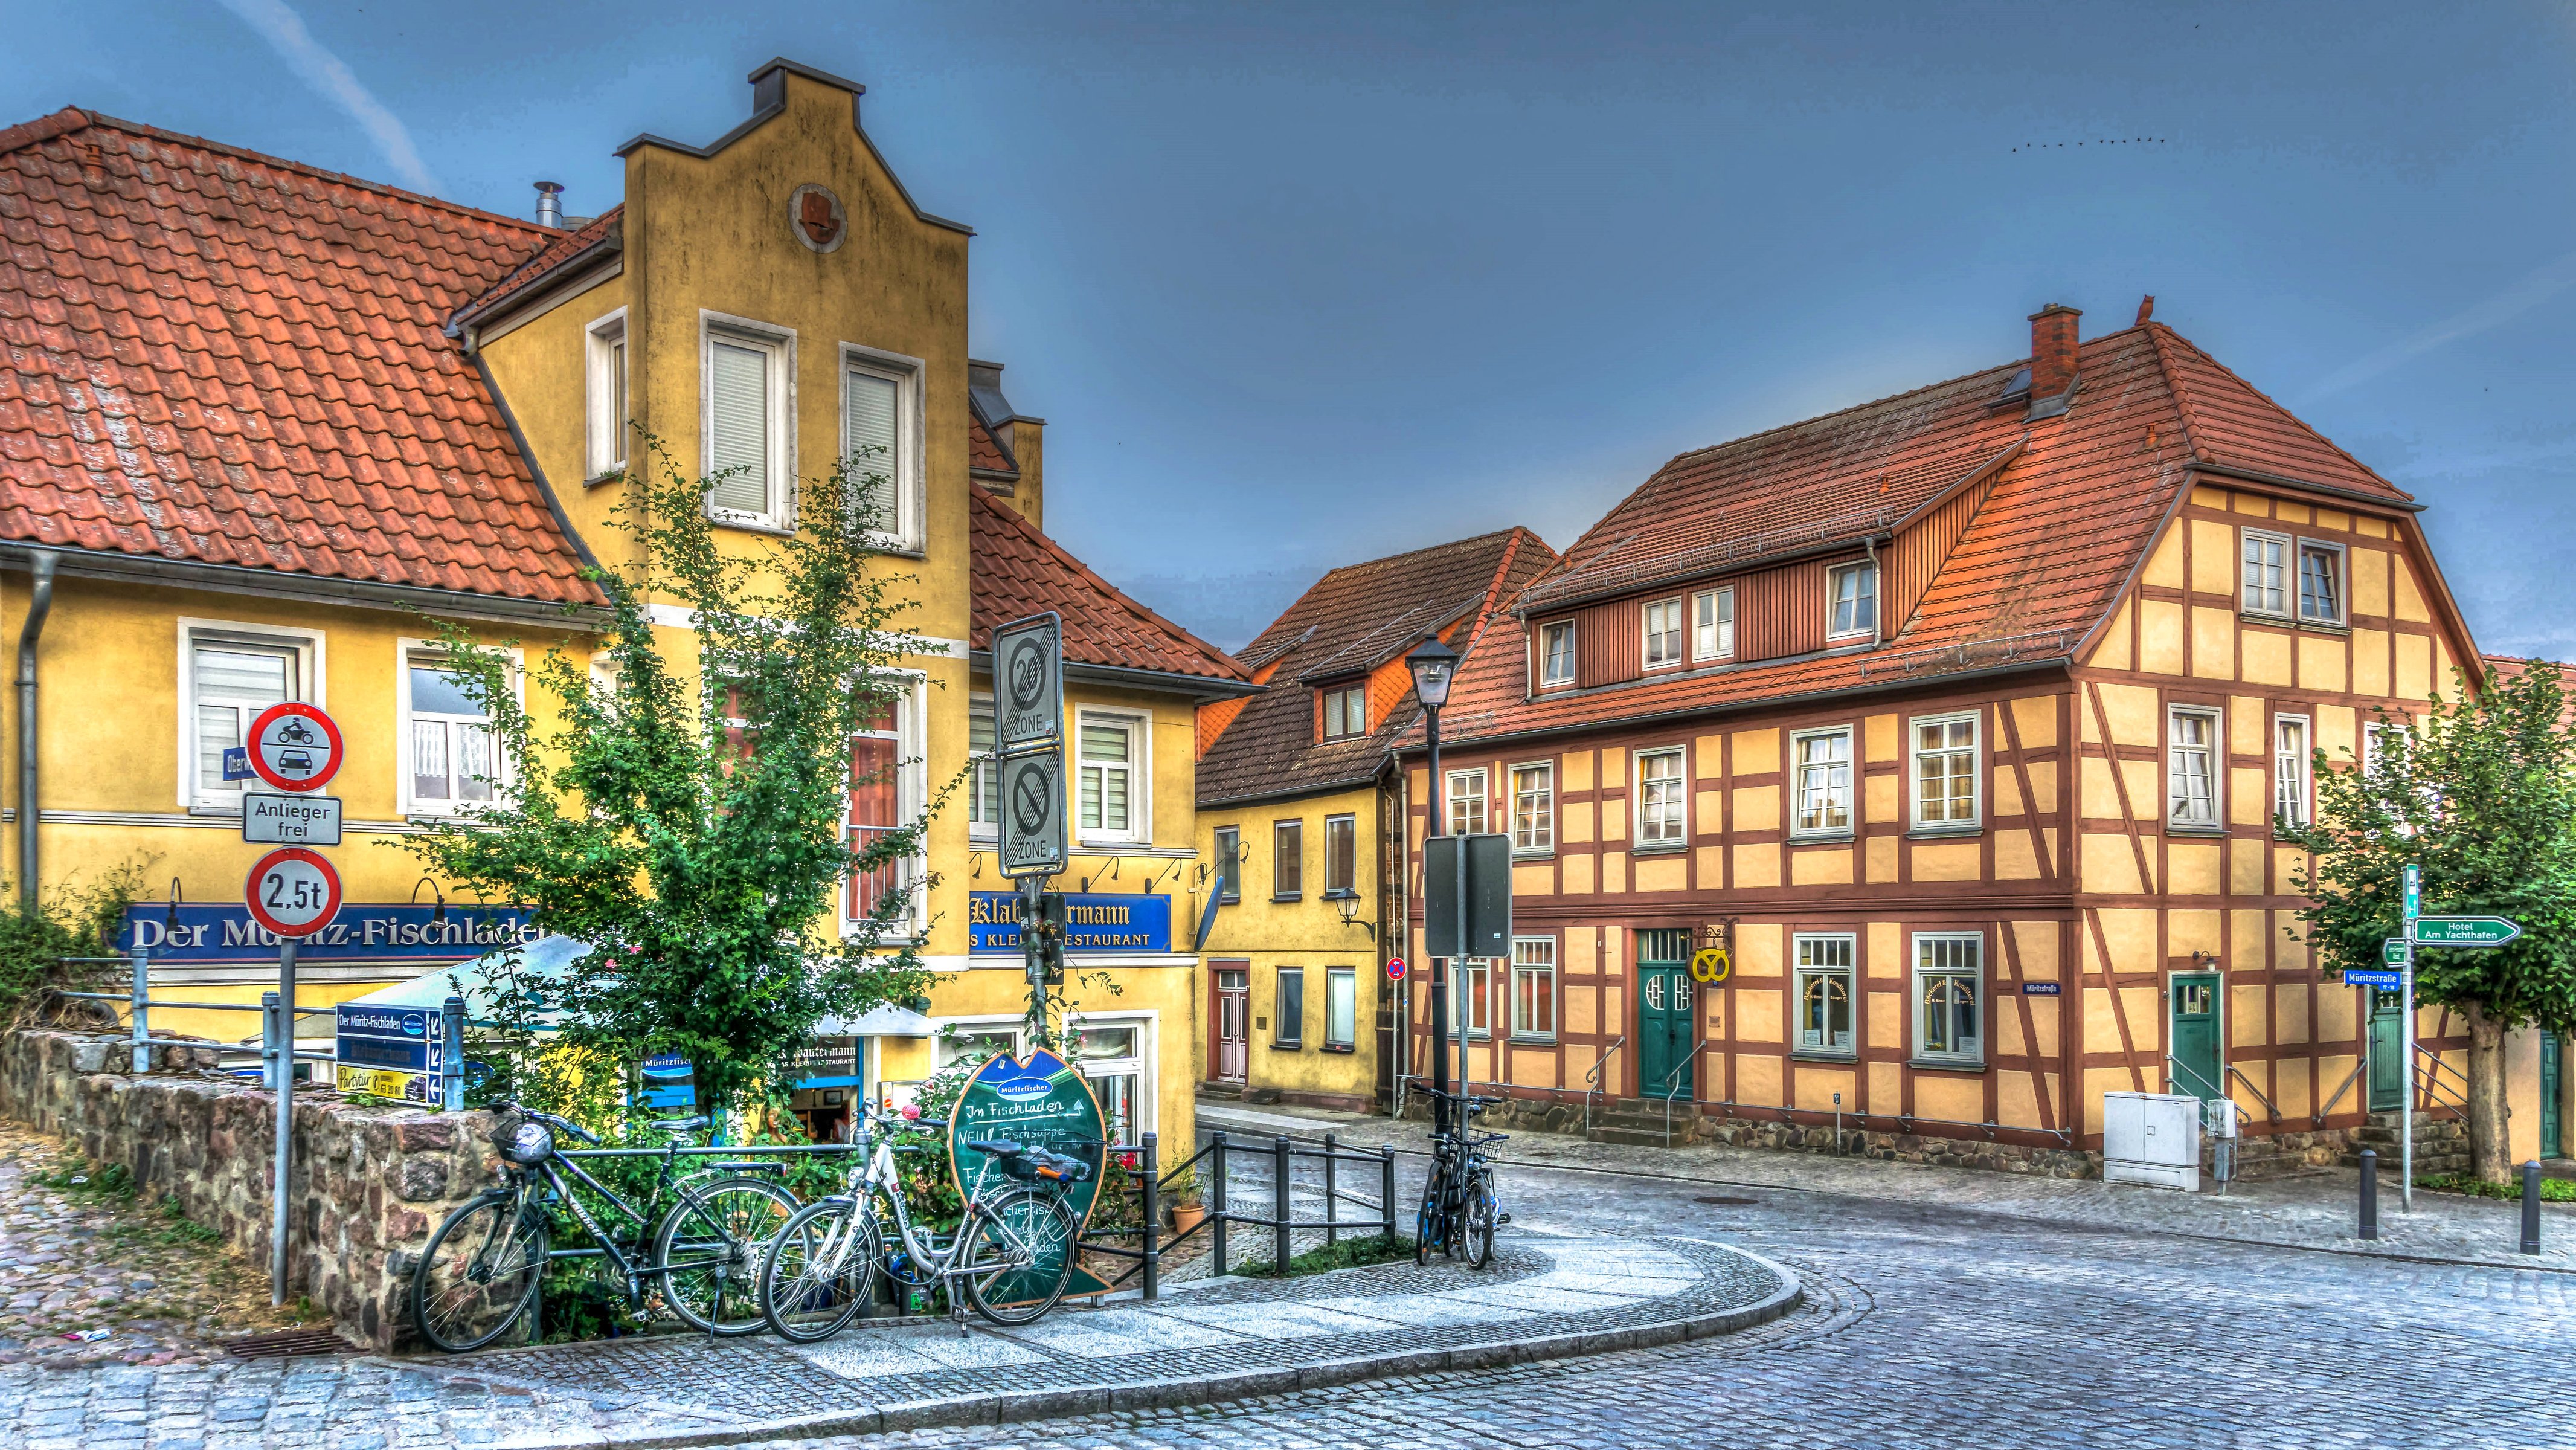 ermany, Houses, Night, Street, Lights, Street, Chemnitz, Cities Wallpaper